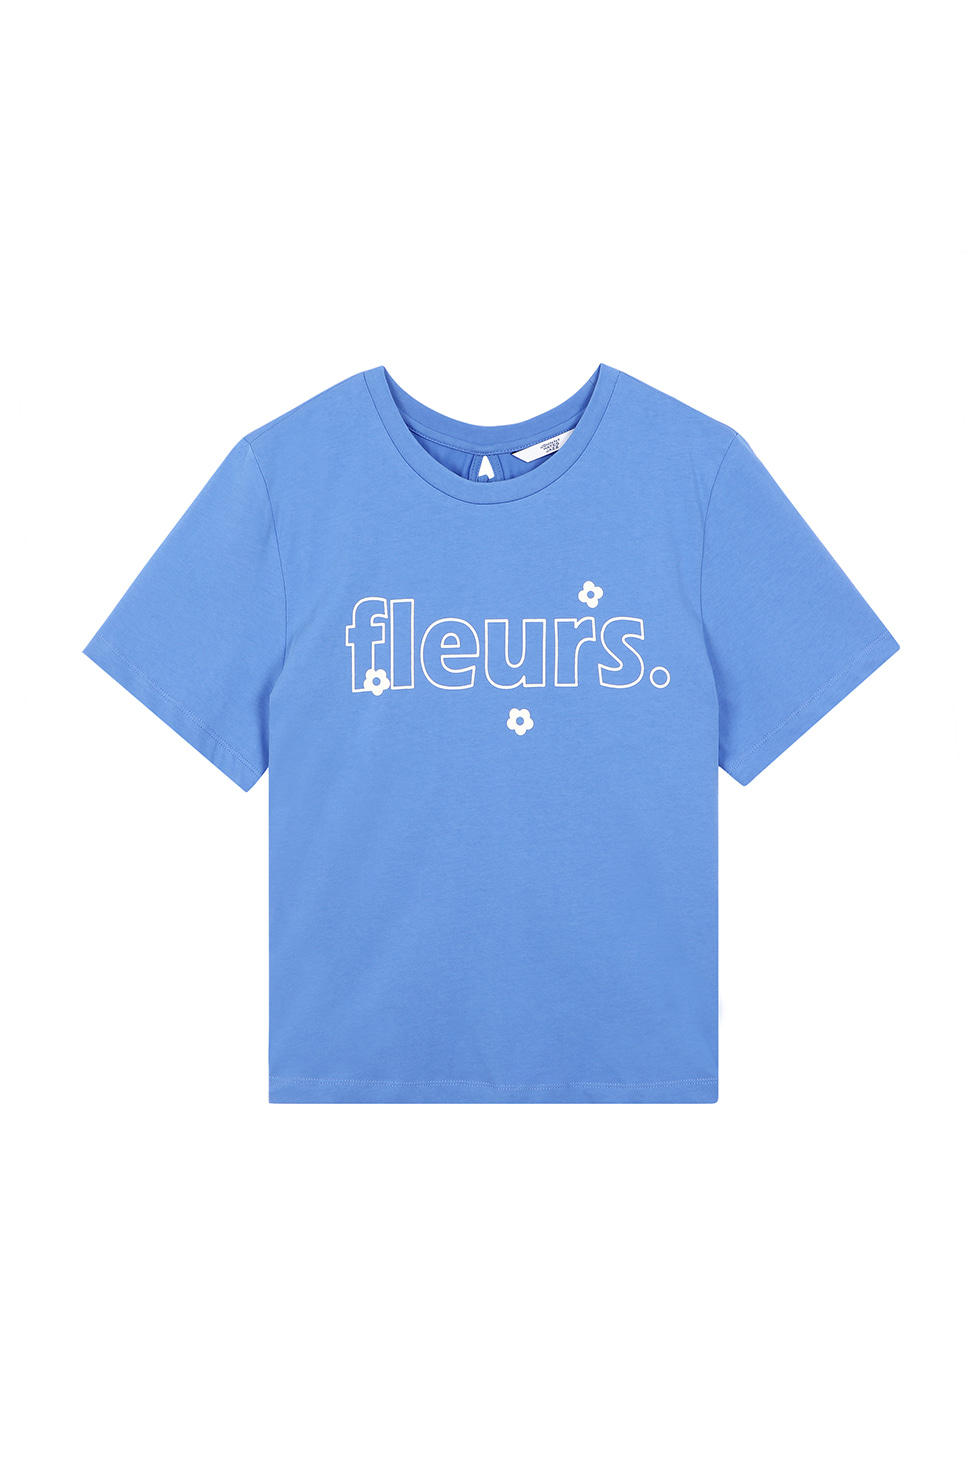 FLEURS T-SHIRTS - BLUE